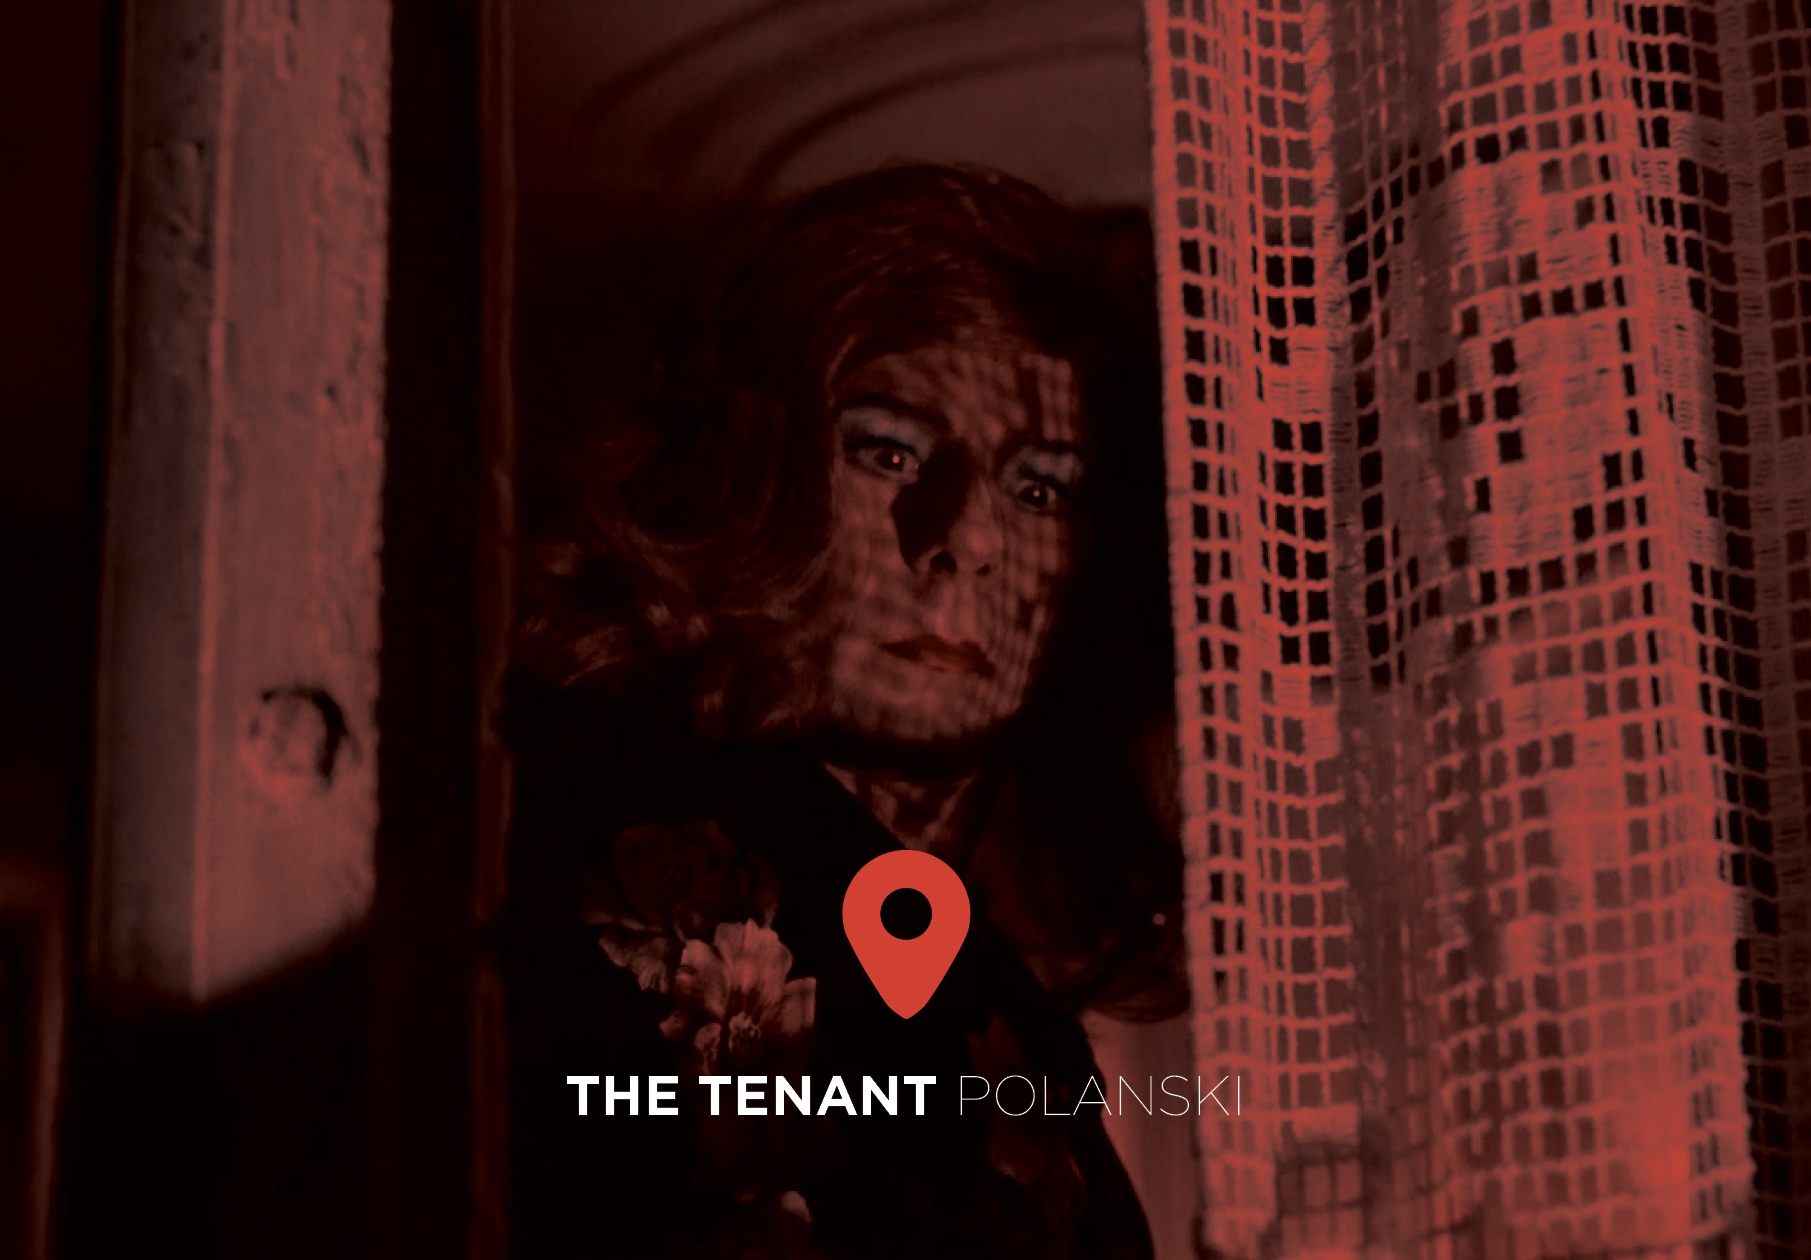 The Tenant by Roman Polanski